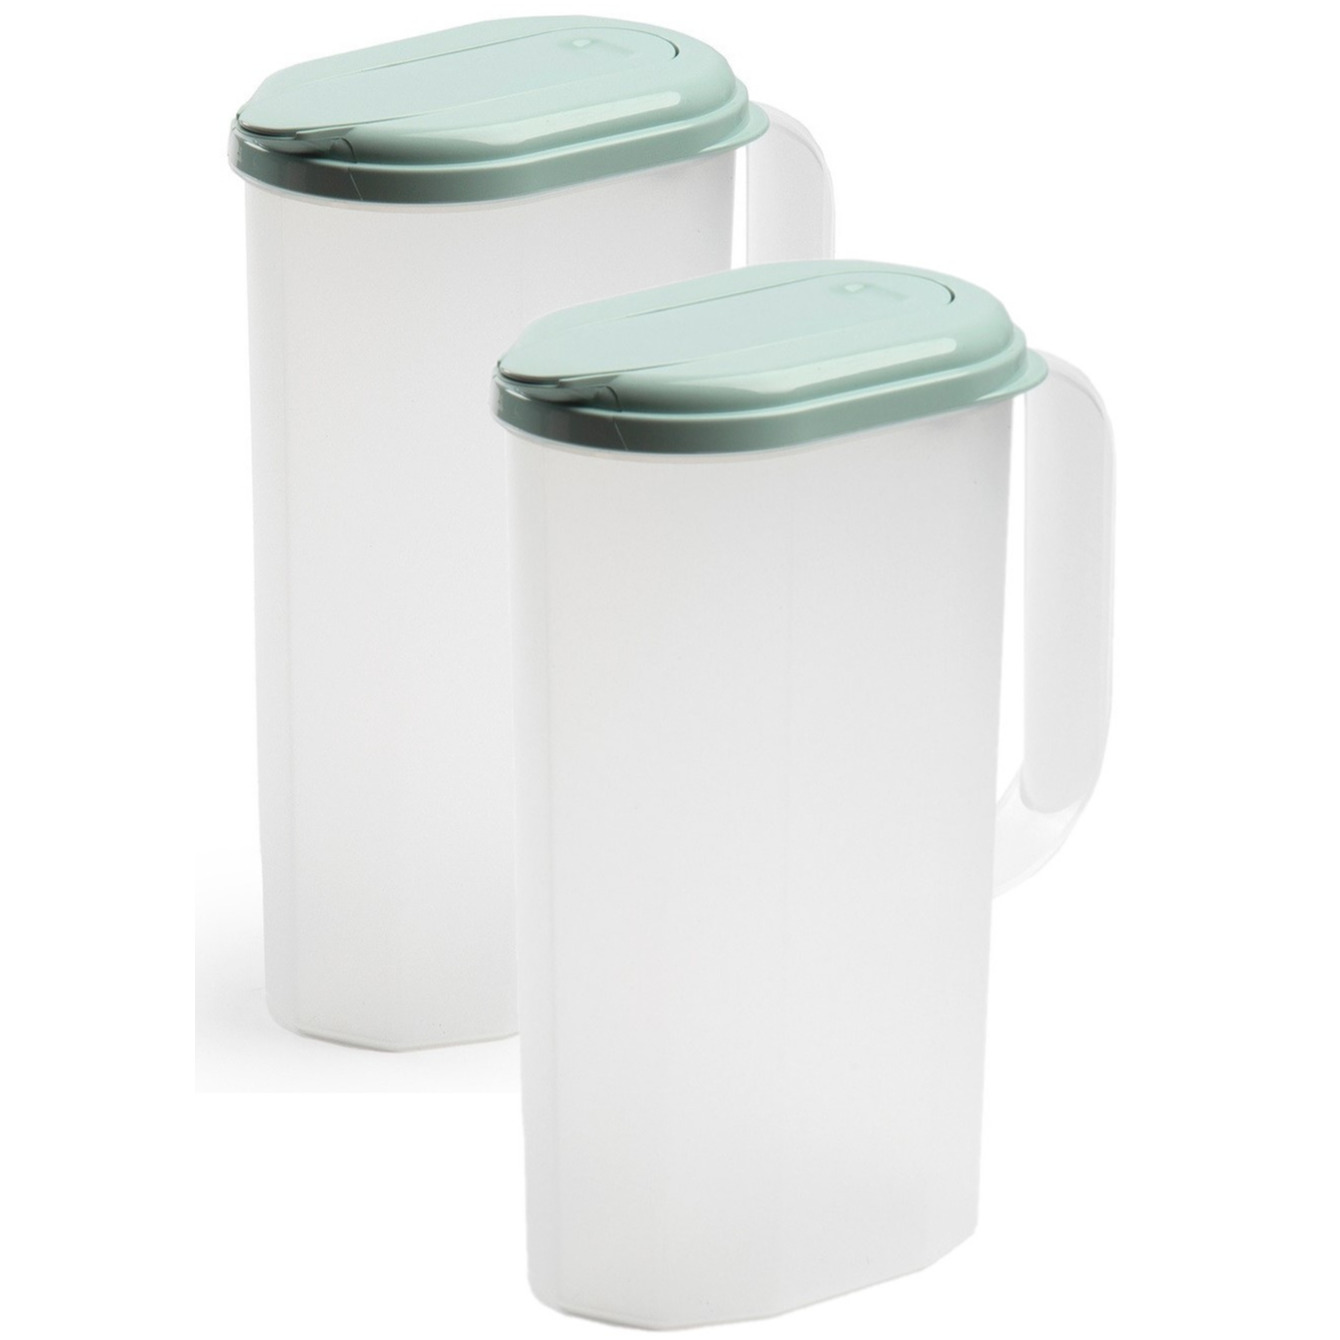 PlasticForte 2x stuks waterkan/sapkan transparant/mintgroen met deksel 2 liter kunststof -